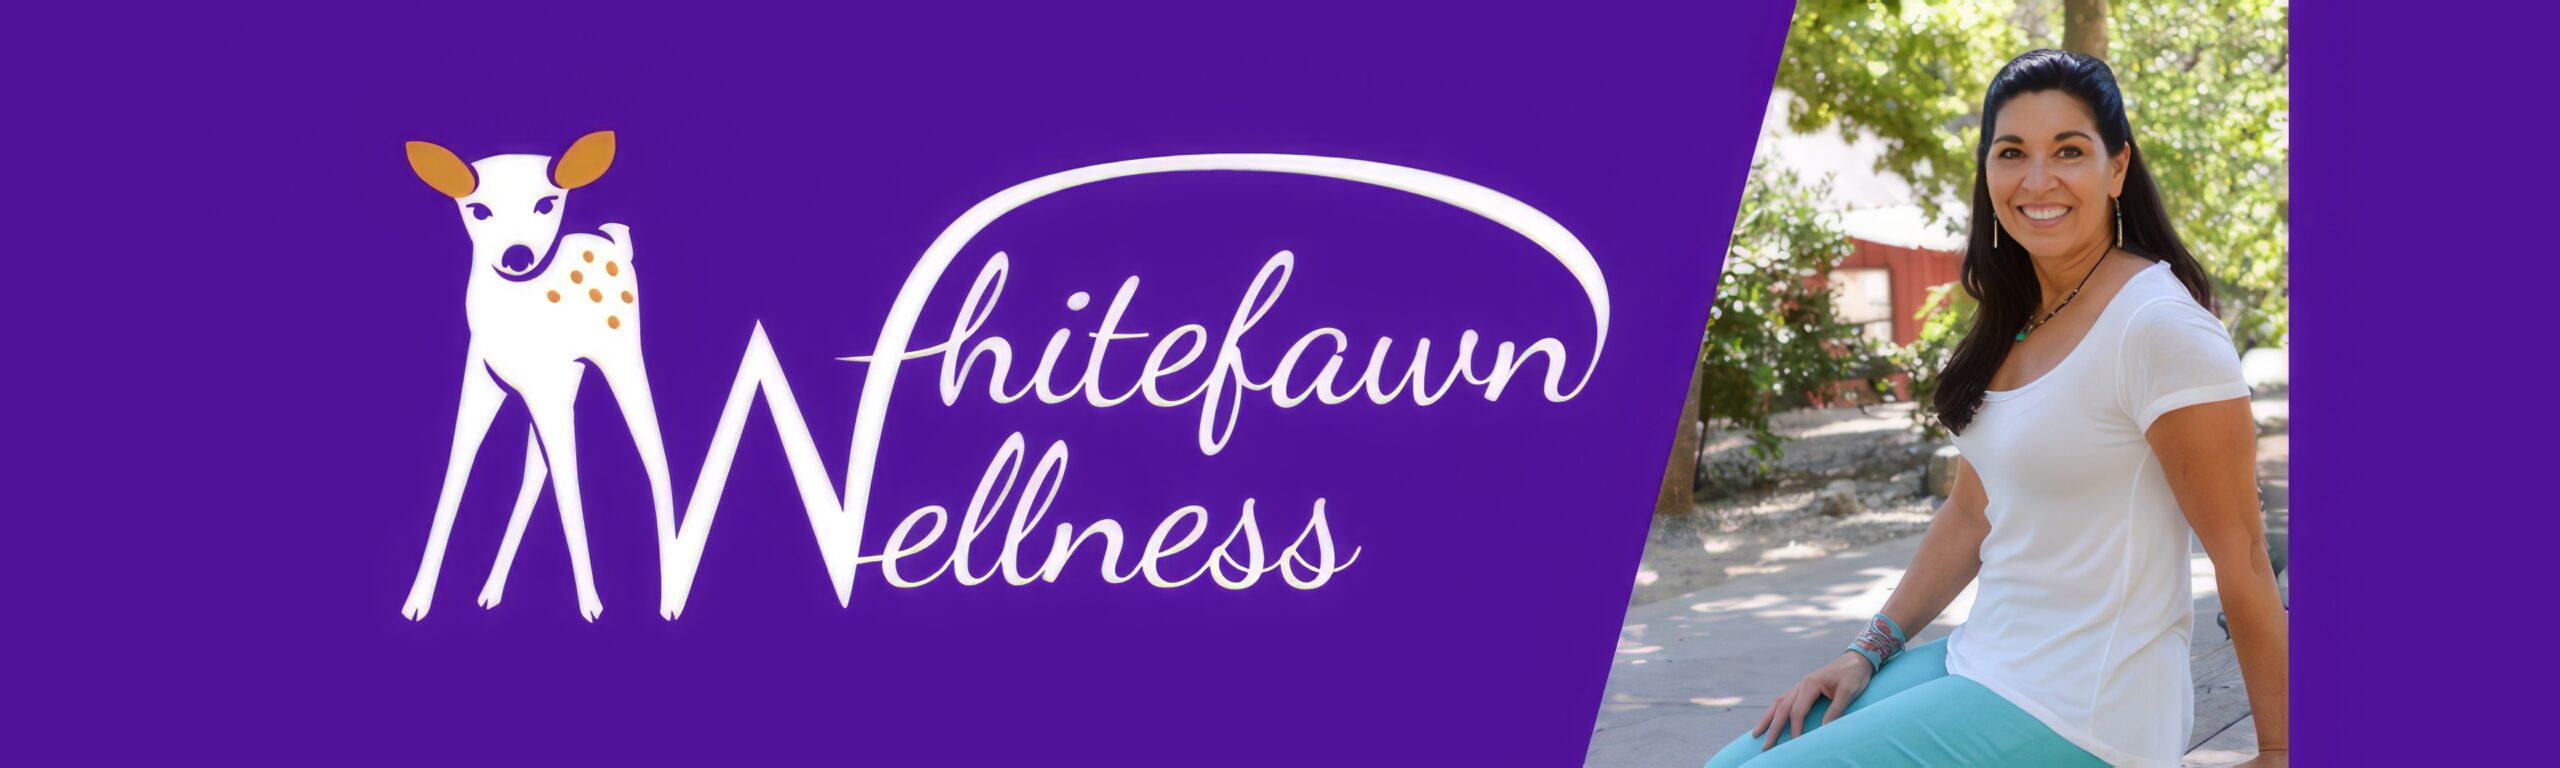 Whitefawn Wellness